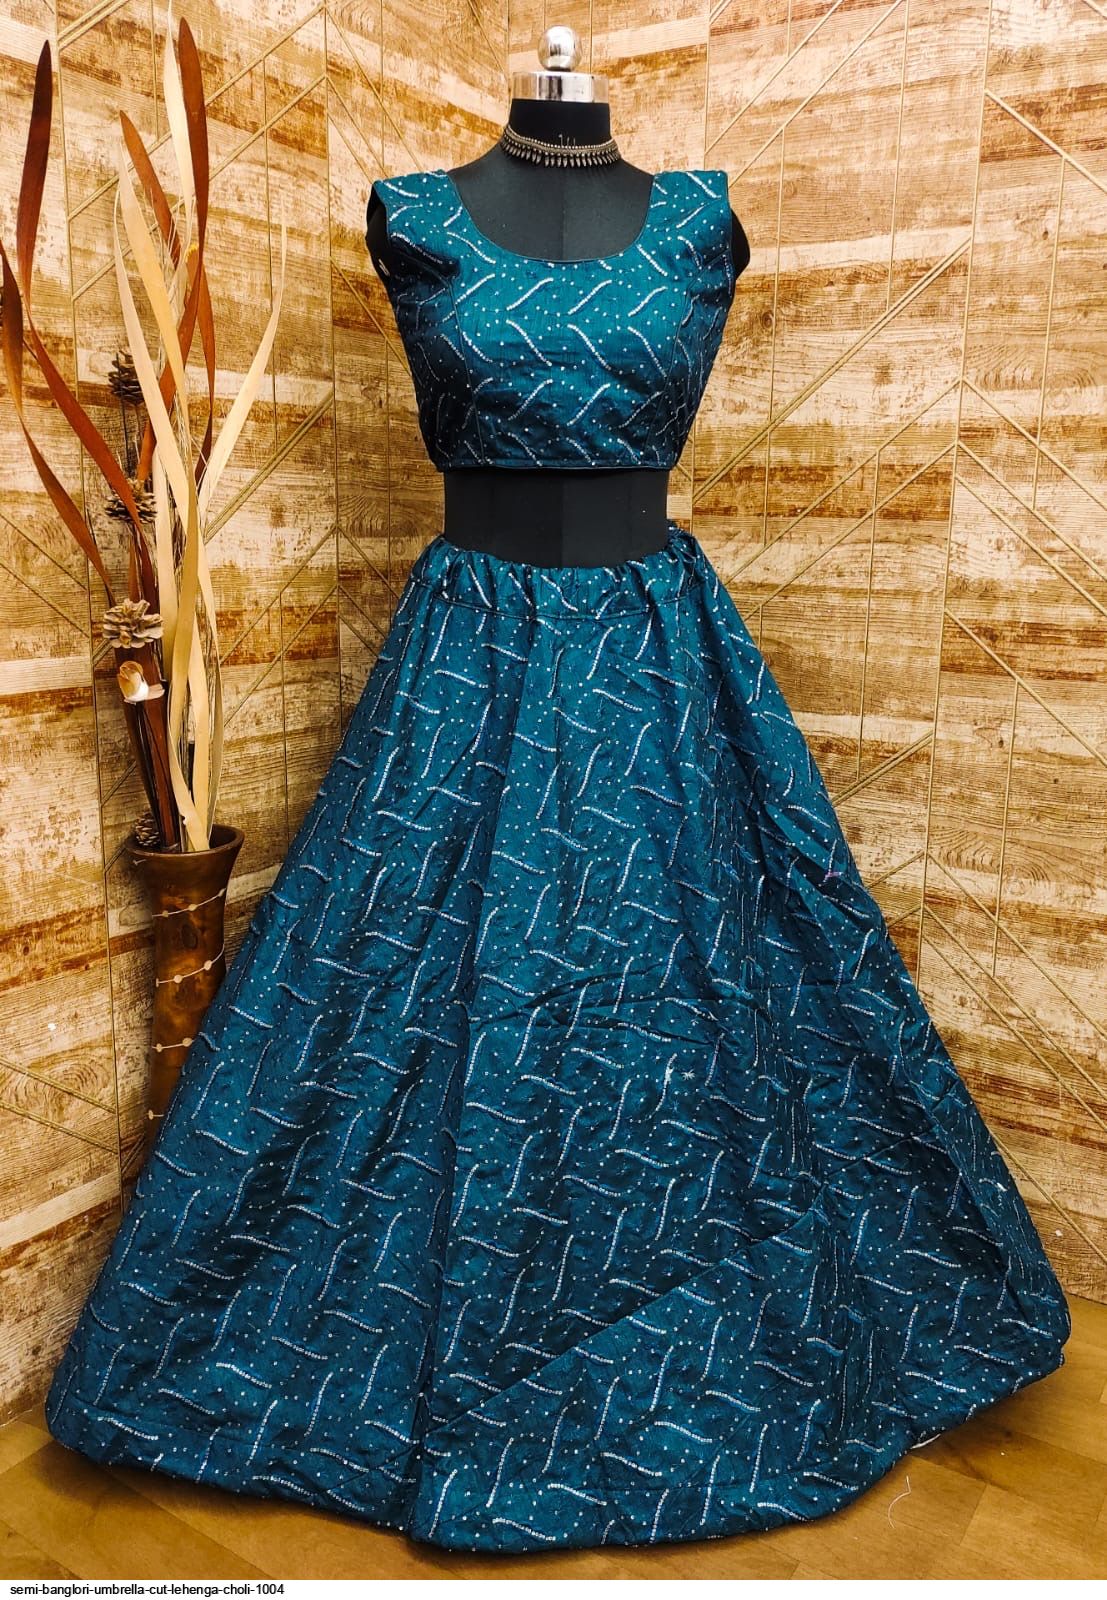 9 Umbrella cut Chooridar stitching ideas | sewing dresses, umbrella dress,  skirt tutorial